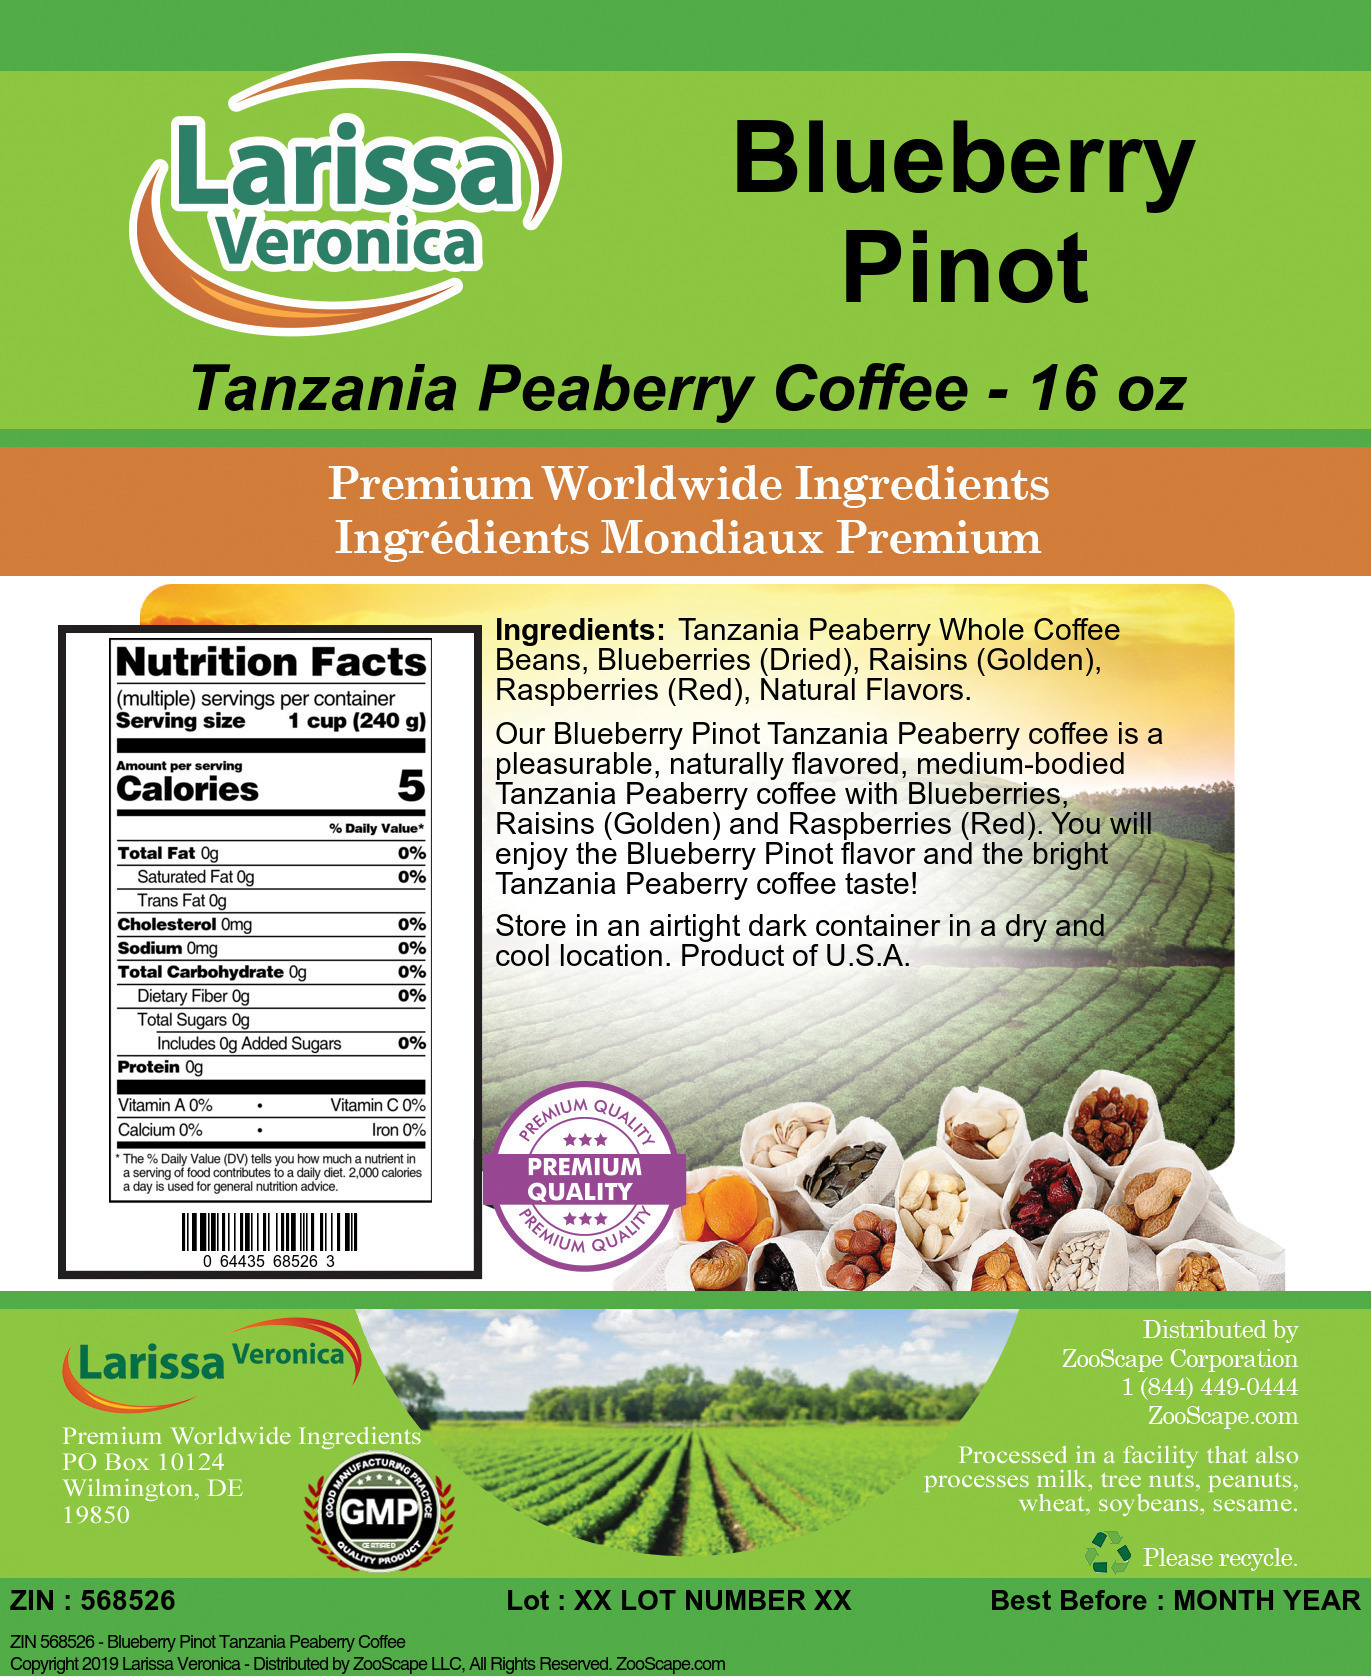 Blueberry Pinot Tanzania Peaberry Coffee - Label